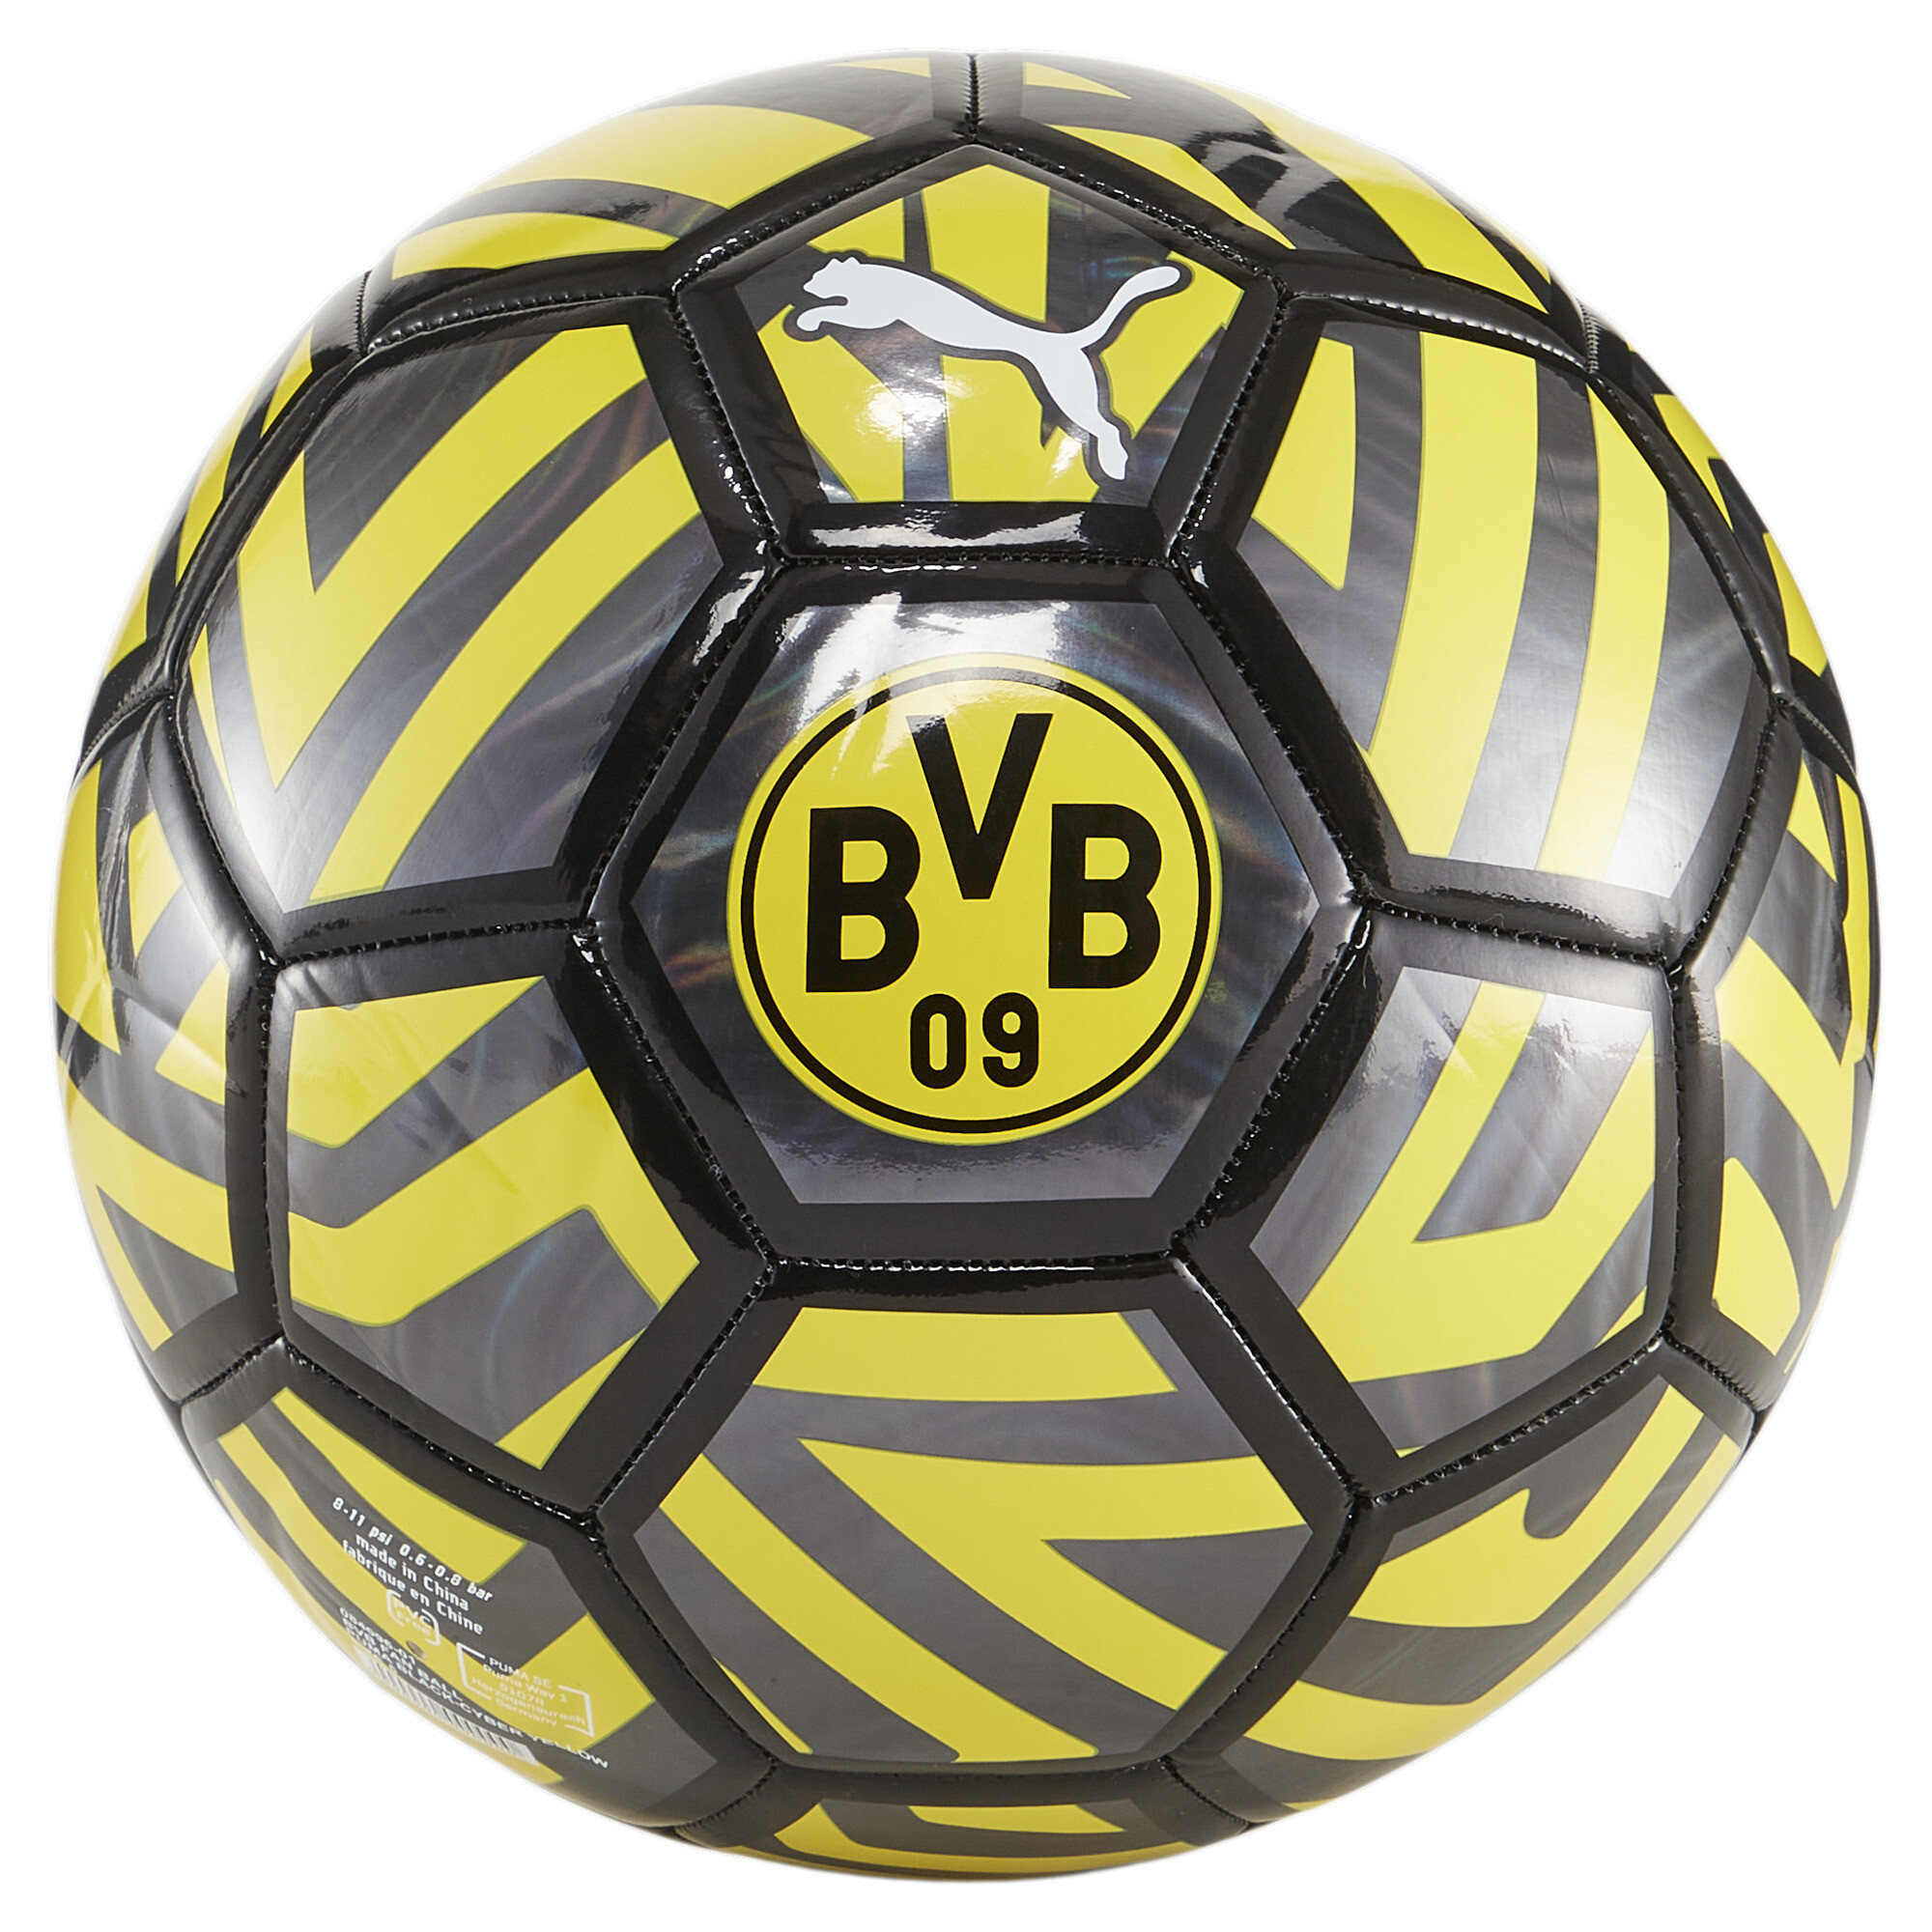 Puma Borussia Dortmund Fan Football, Black, Size 3, Accessories